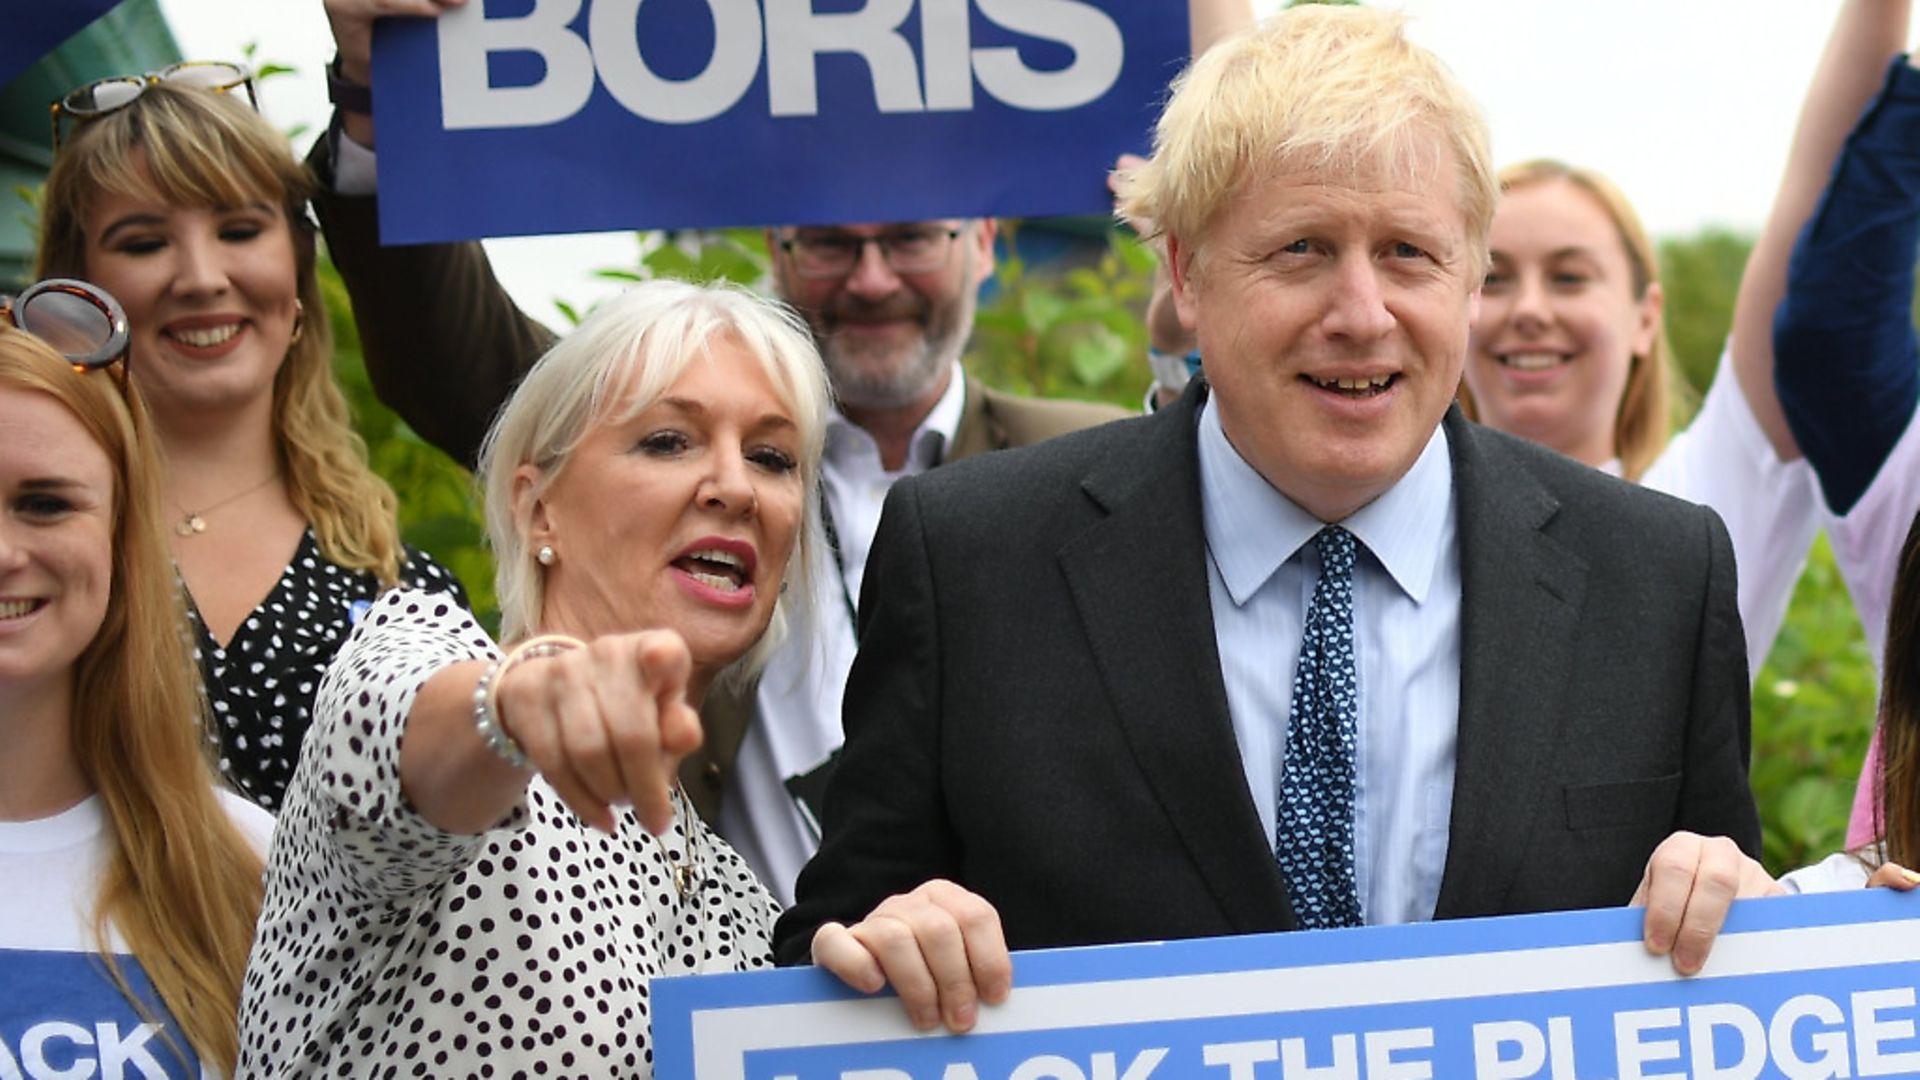 Nadine Dorries with Conservative Party leader Boris Johnson. Photograph: Joe Giddens/PA